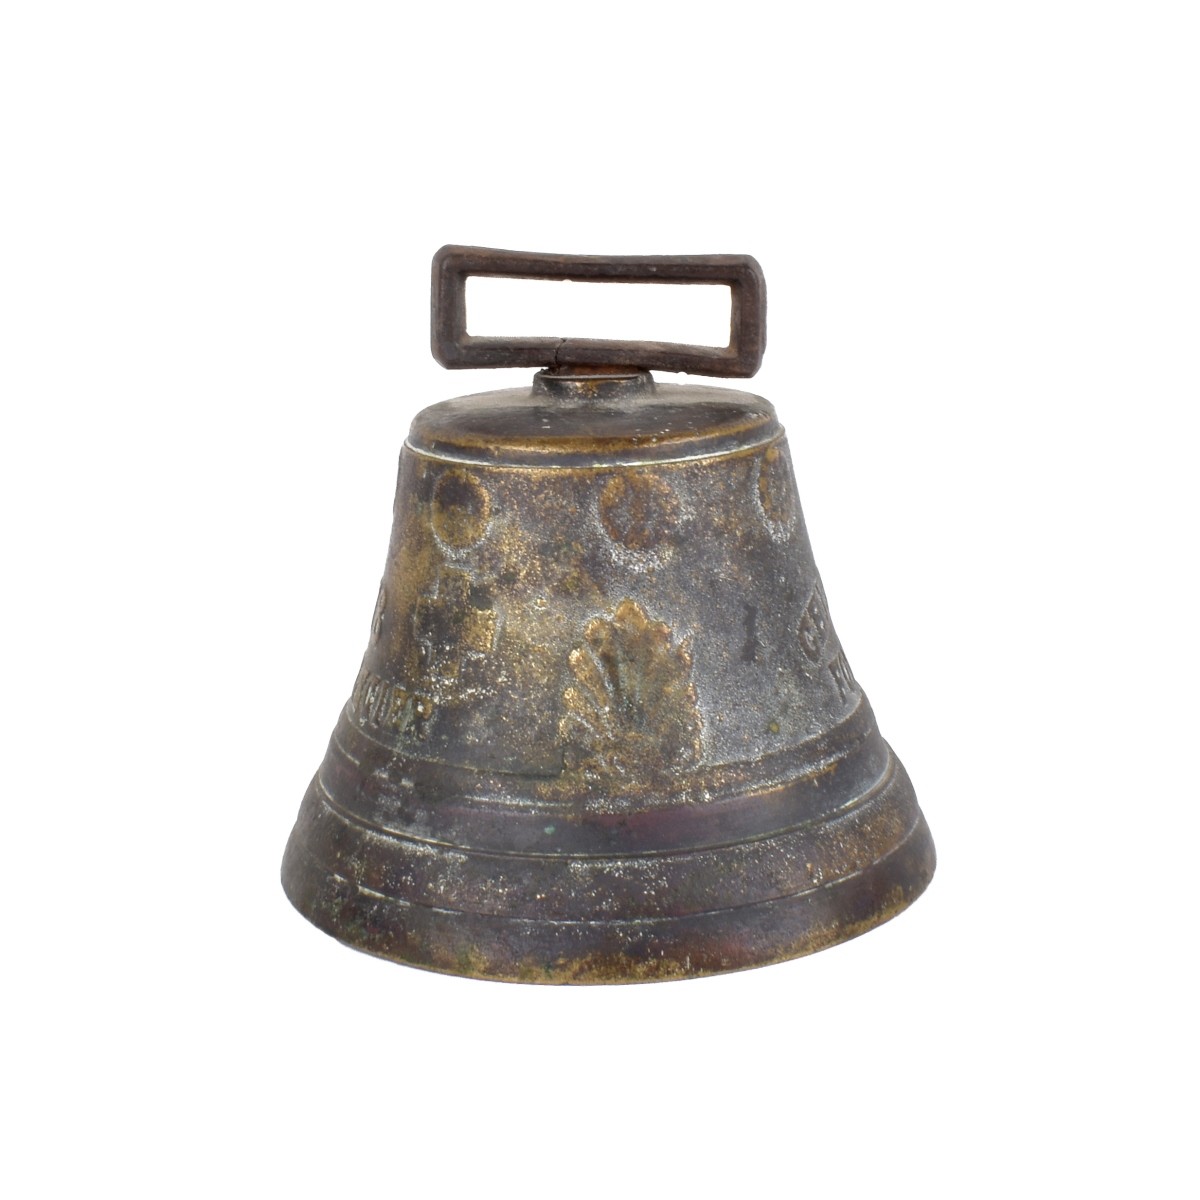 1878 Saignelegier Bell